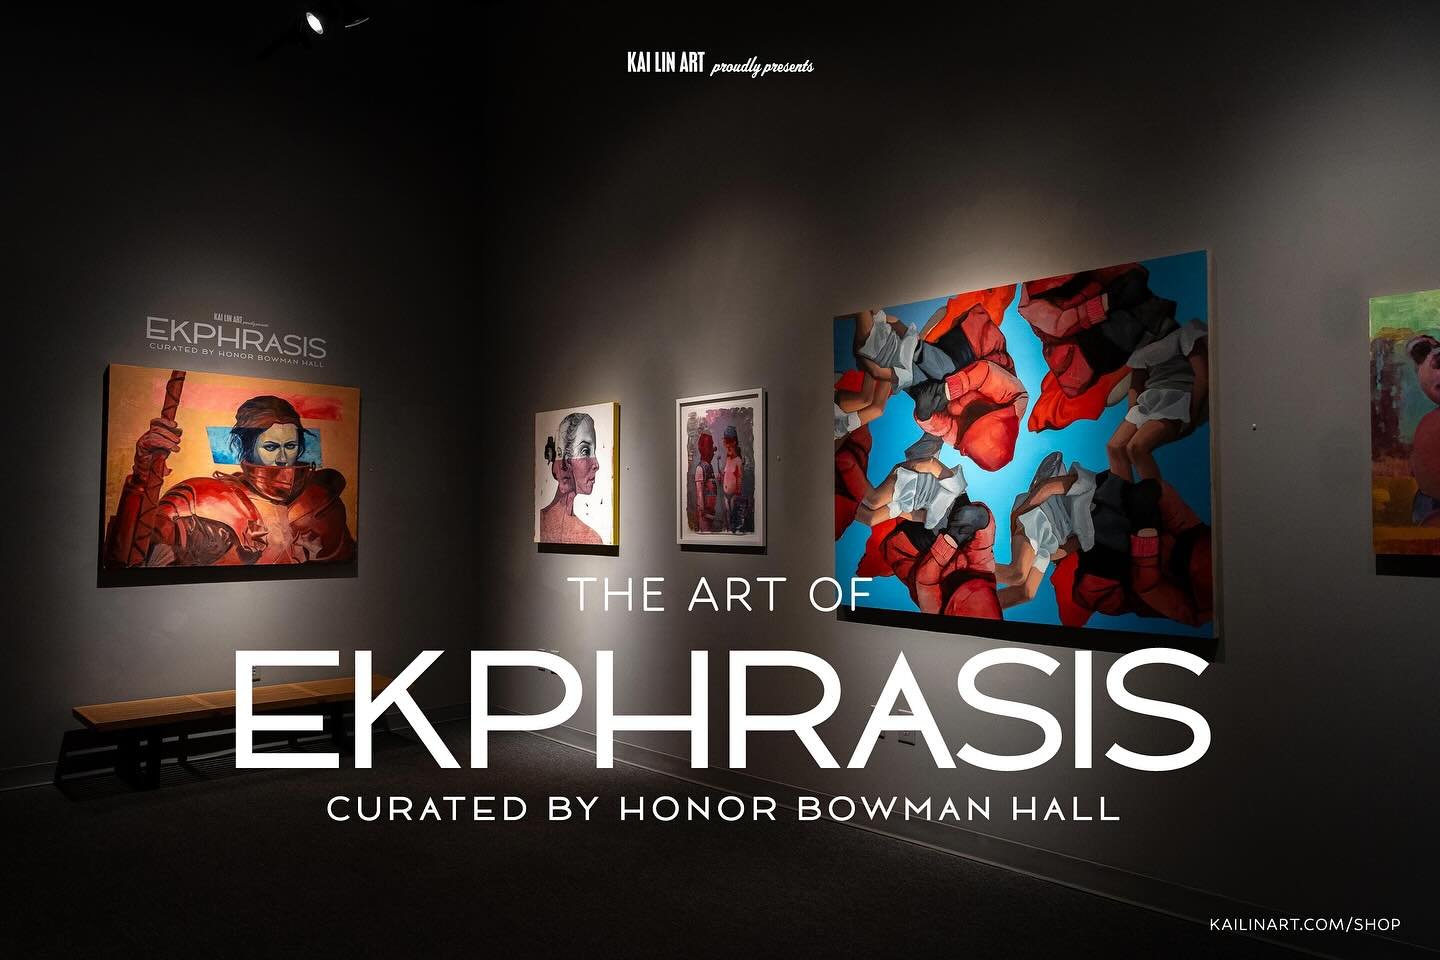 The Art of #ekphrasis curated by @honorbowmanhall featuring @bentollefson @michael74obrien @zoltangerliczki @dovemchargue @gregoryeltringham @hollymathewsart @matthewrobertsonart now on exhibit @kailinart 

https://www.kailinart.com/news/the-art-of-e